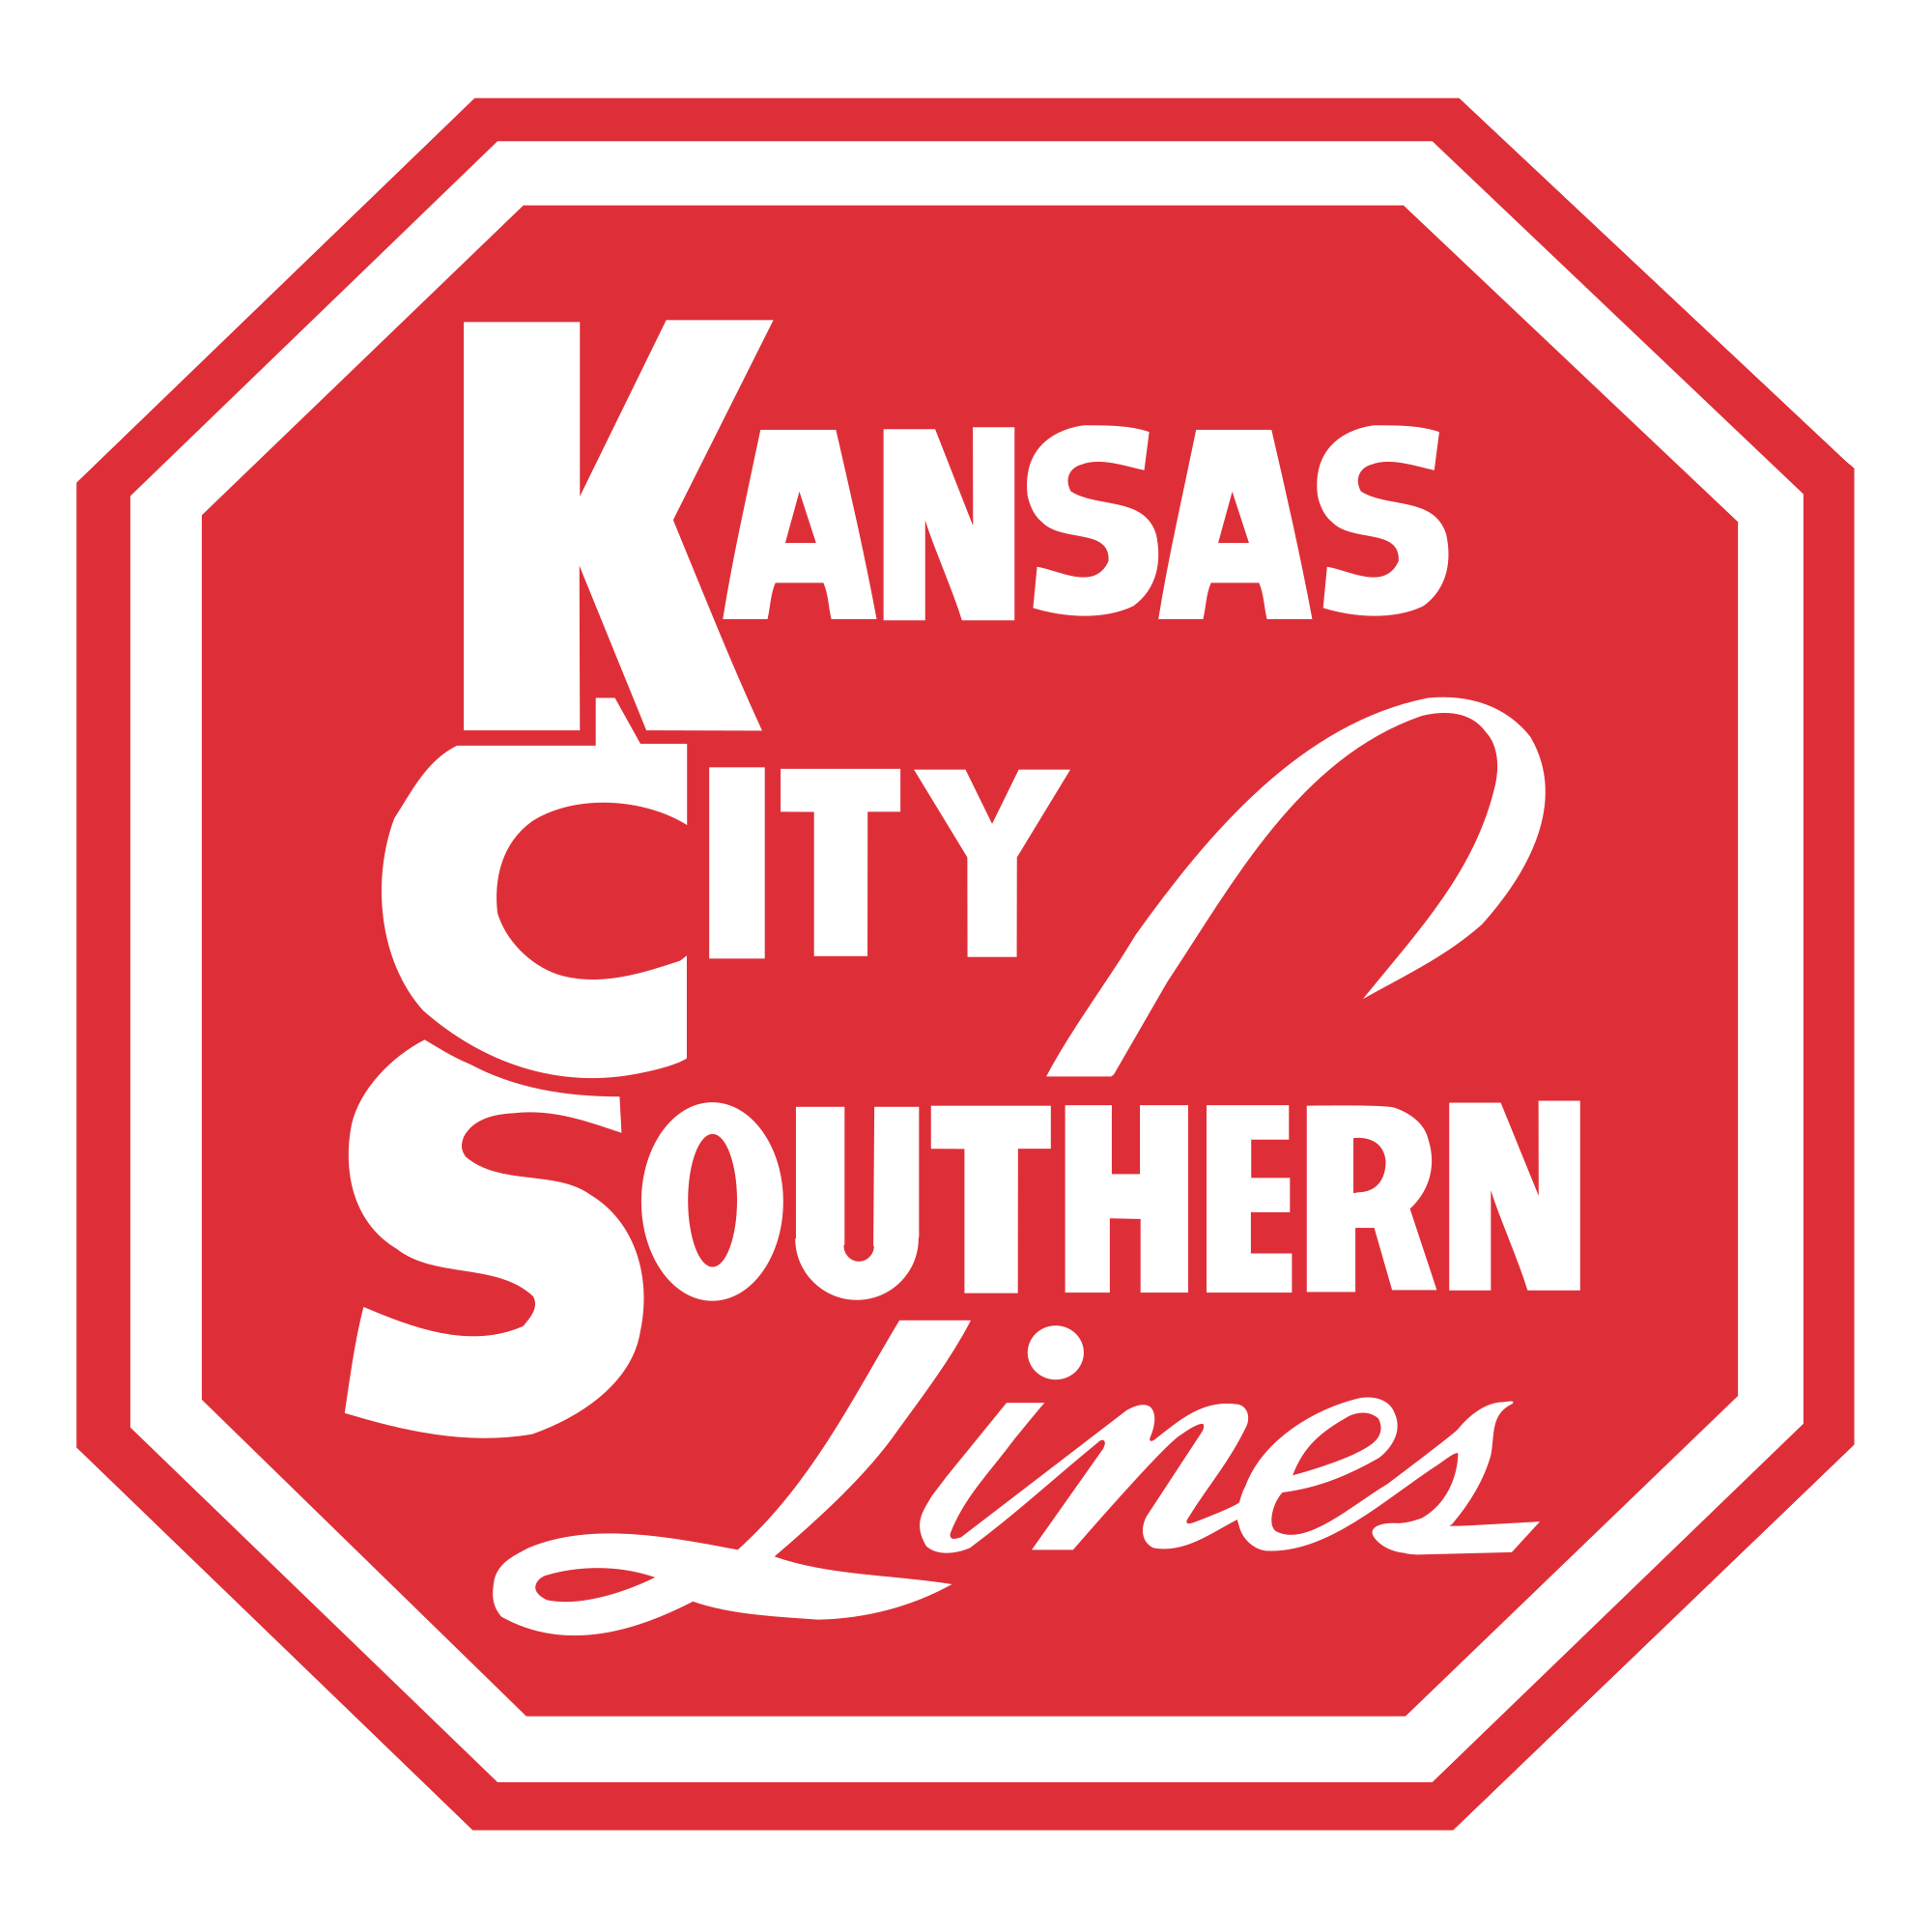 Southern Railway Logo - Kansas City Southern Railway